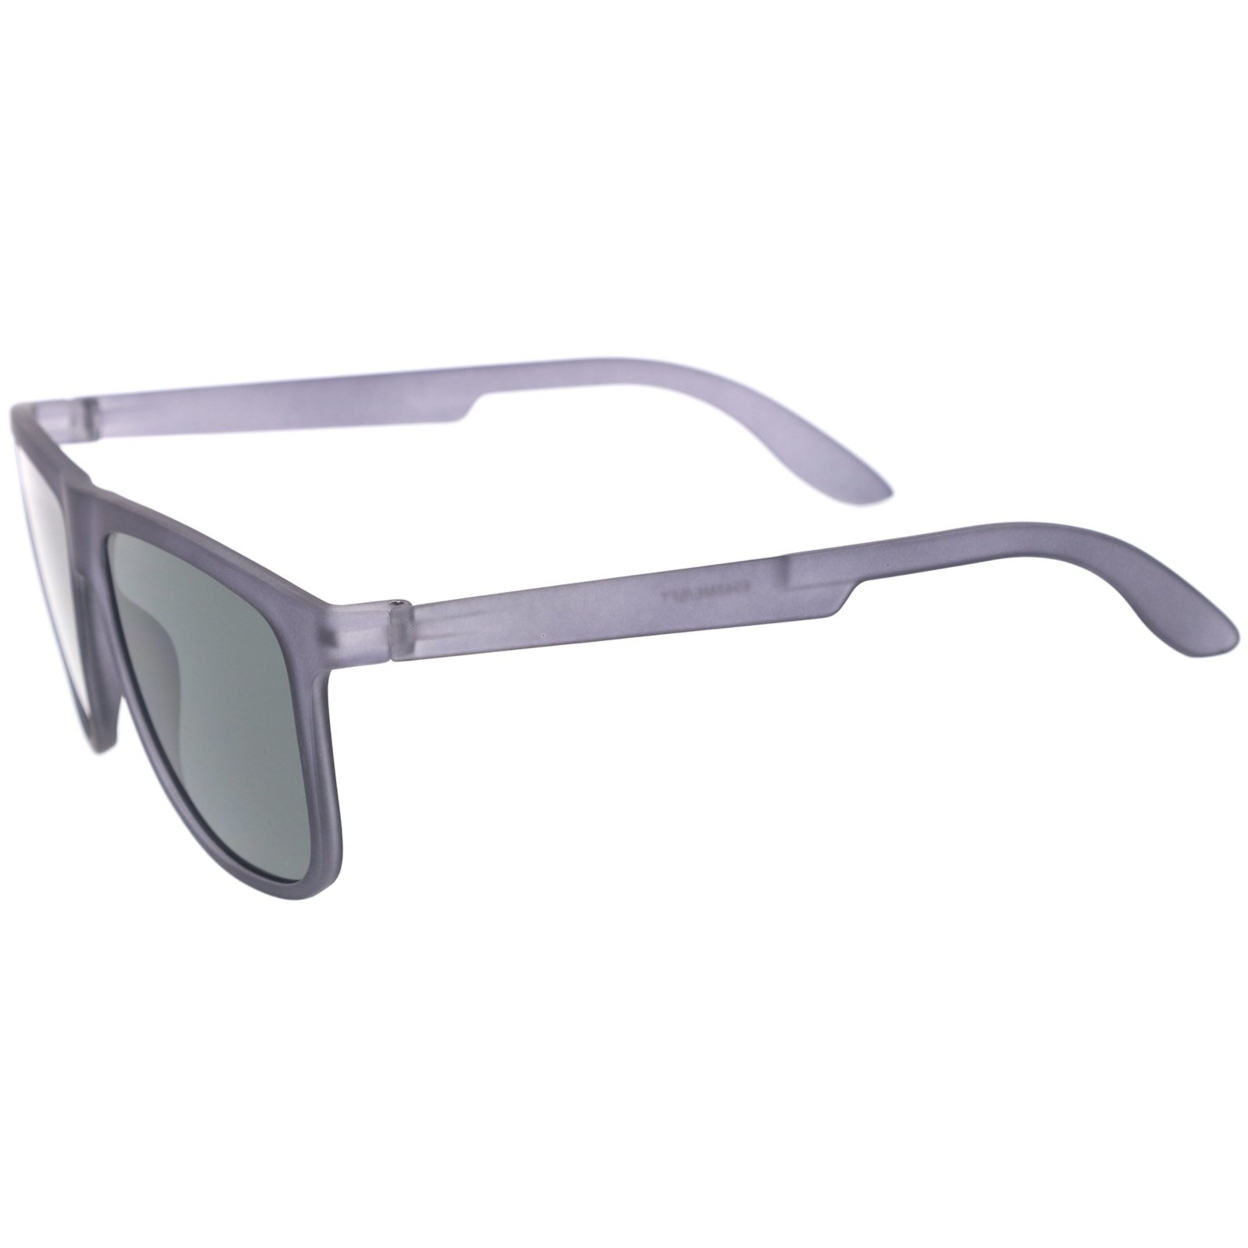 Lifestyle Rubberized Matte Finish Flat Top Square Sunglasses 55mm - Rubberized Black / Smoke